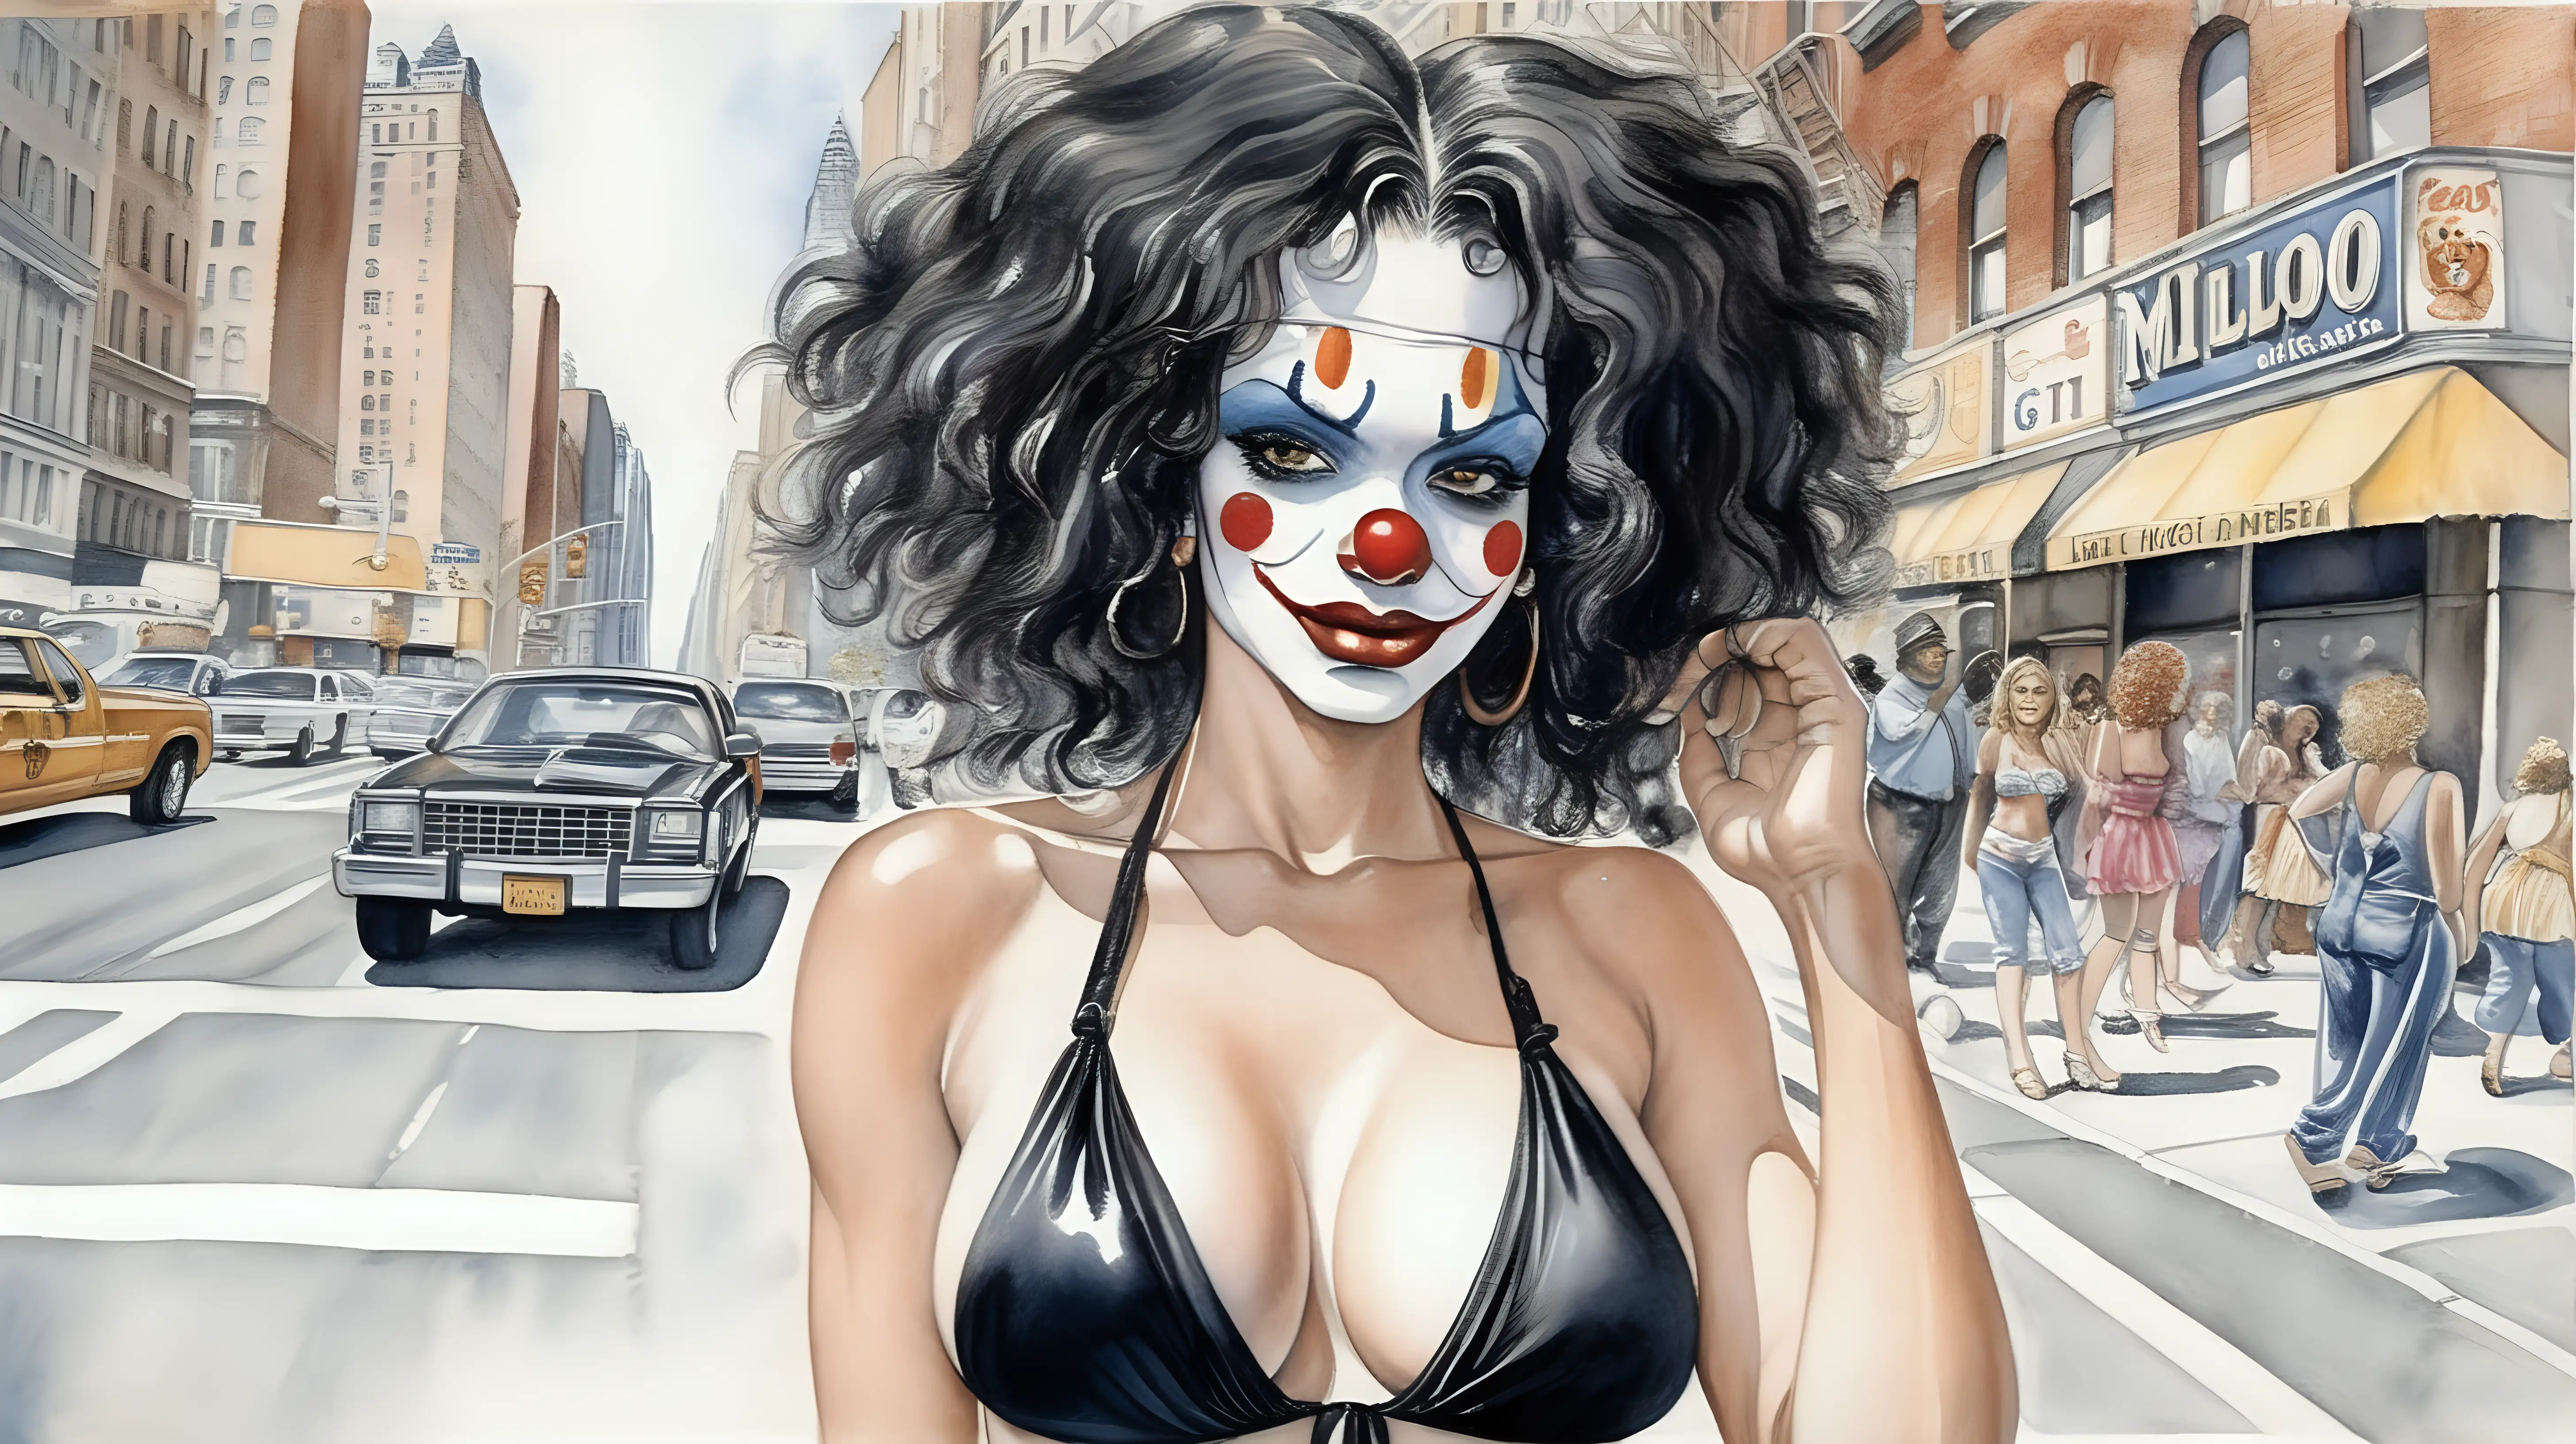 Seductive Clown in Milo Manara Style on New York Street